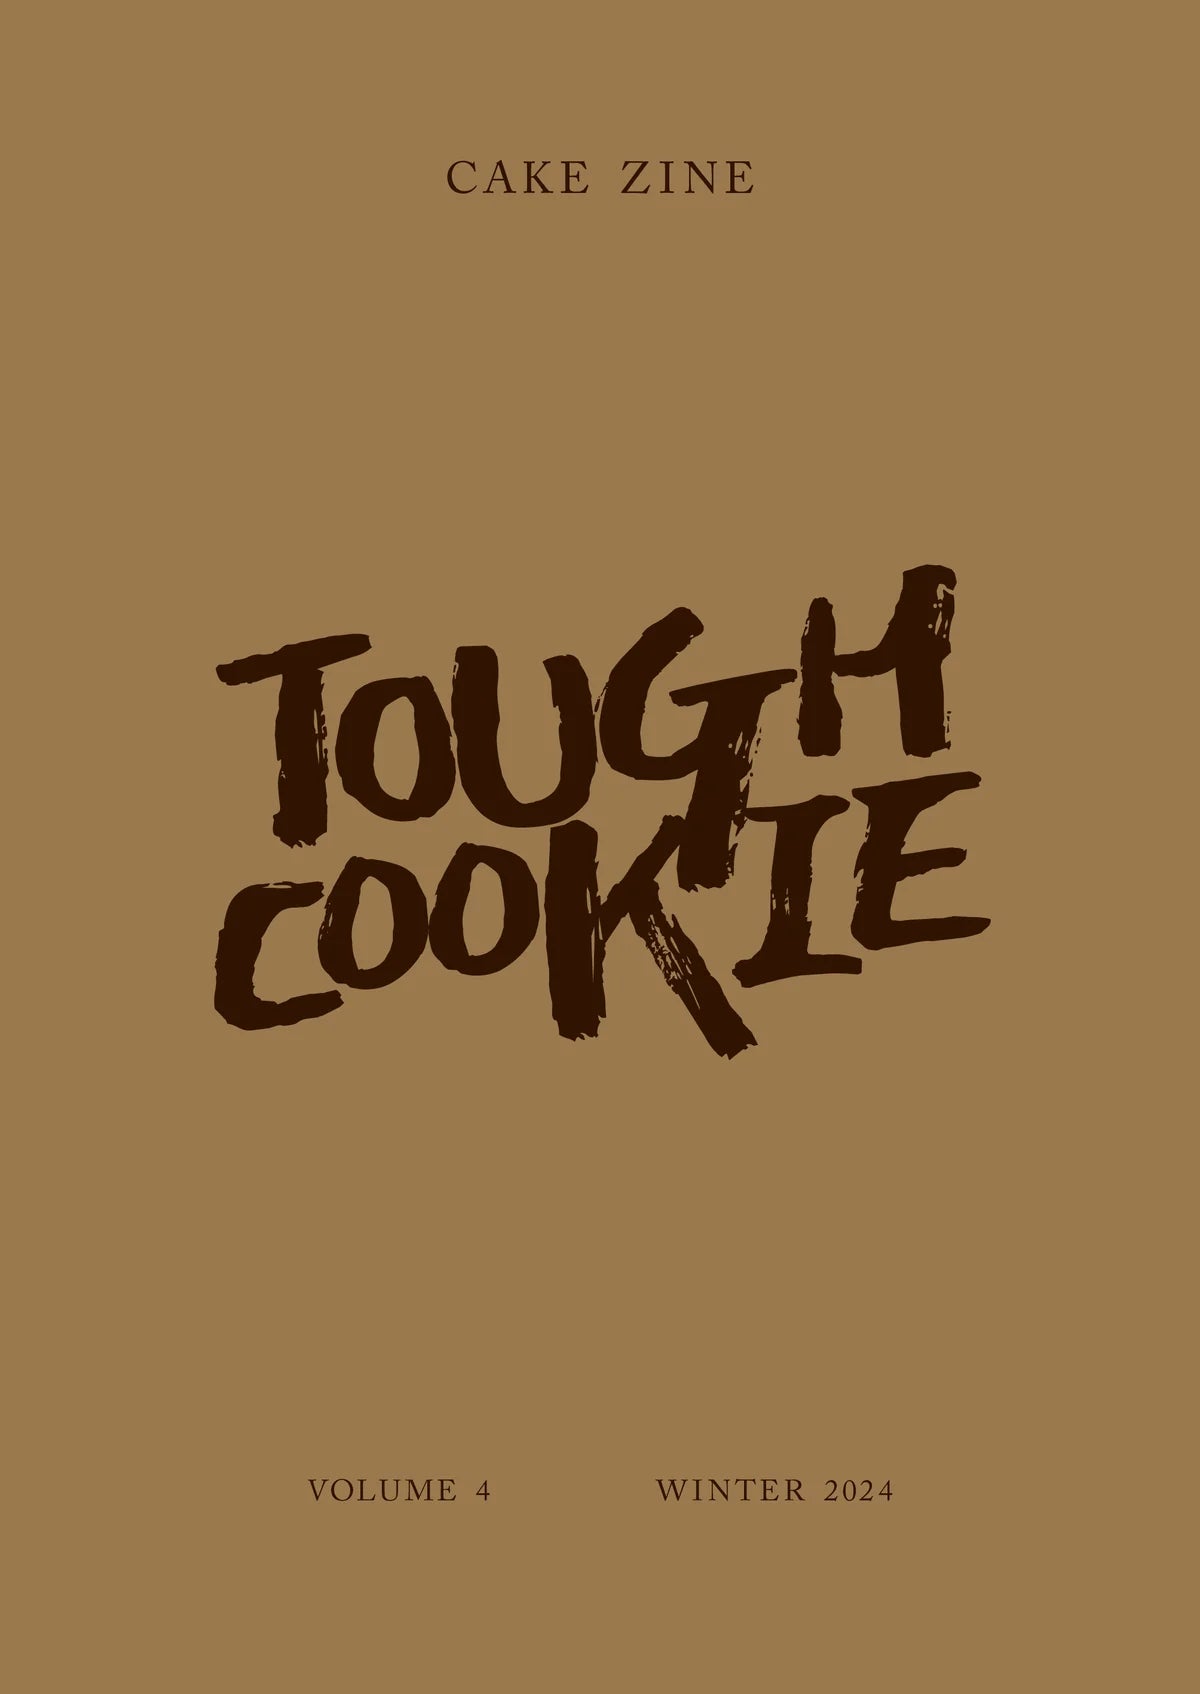 Cake Zine #4: Tough Cookie